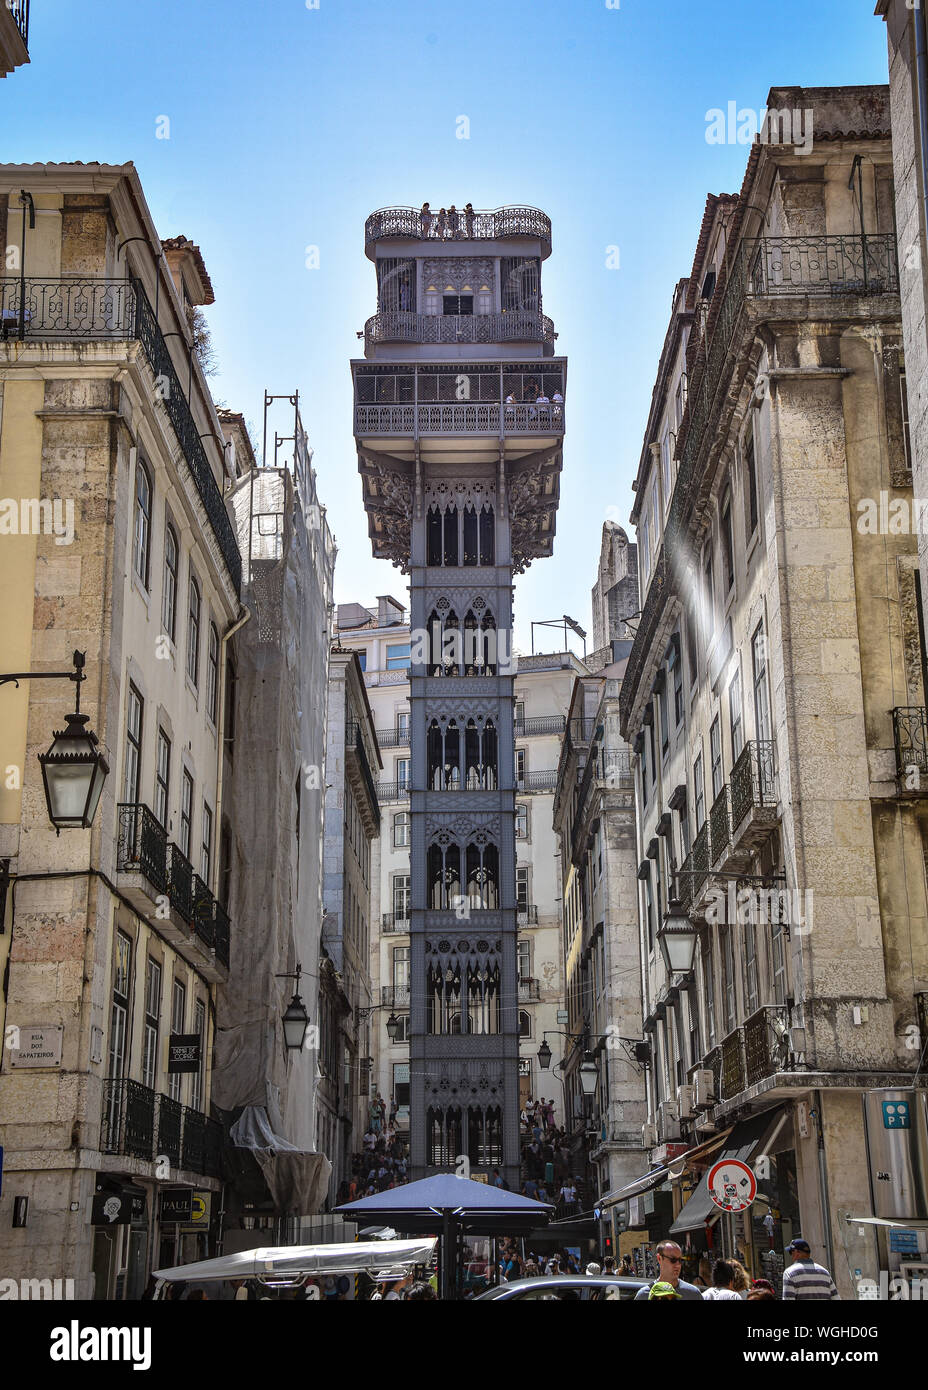 Lisbon, Portugal - July 24, 2019: The Santa Justa Lift, an iron-cast elevator built in 1902 Stock Photo